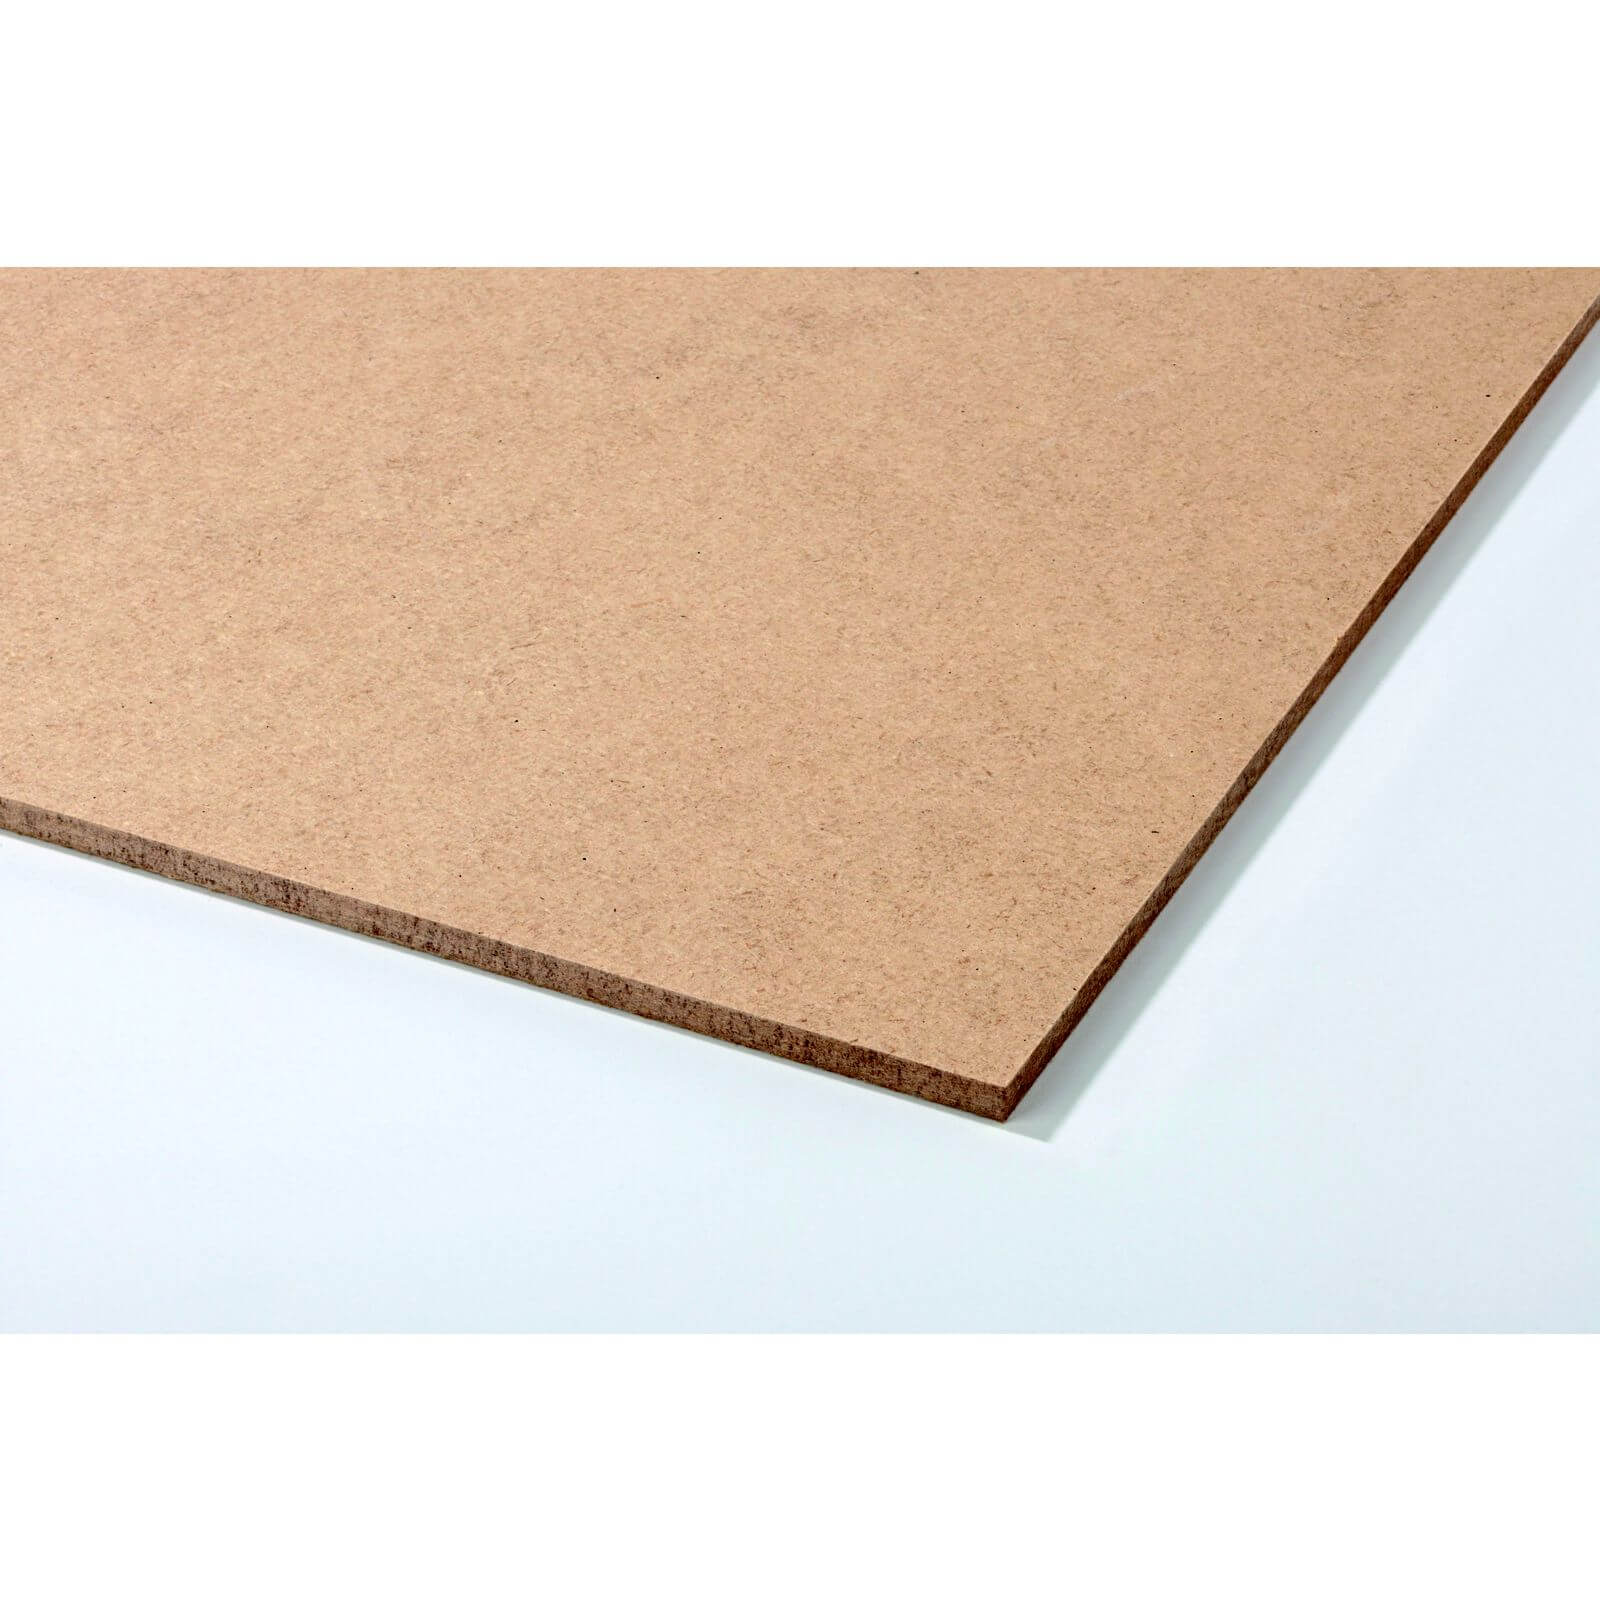 Metsa HDF Hardboard Sheet Board 1.2m (1220 x 607 x 3mm)